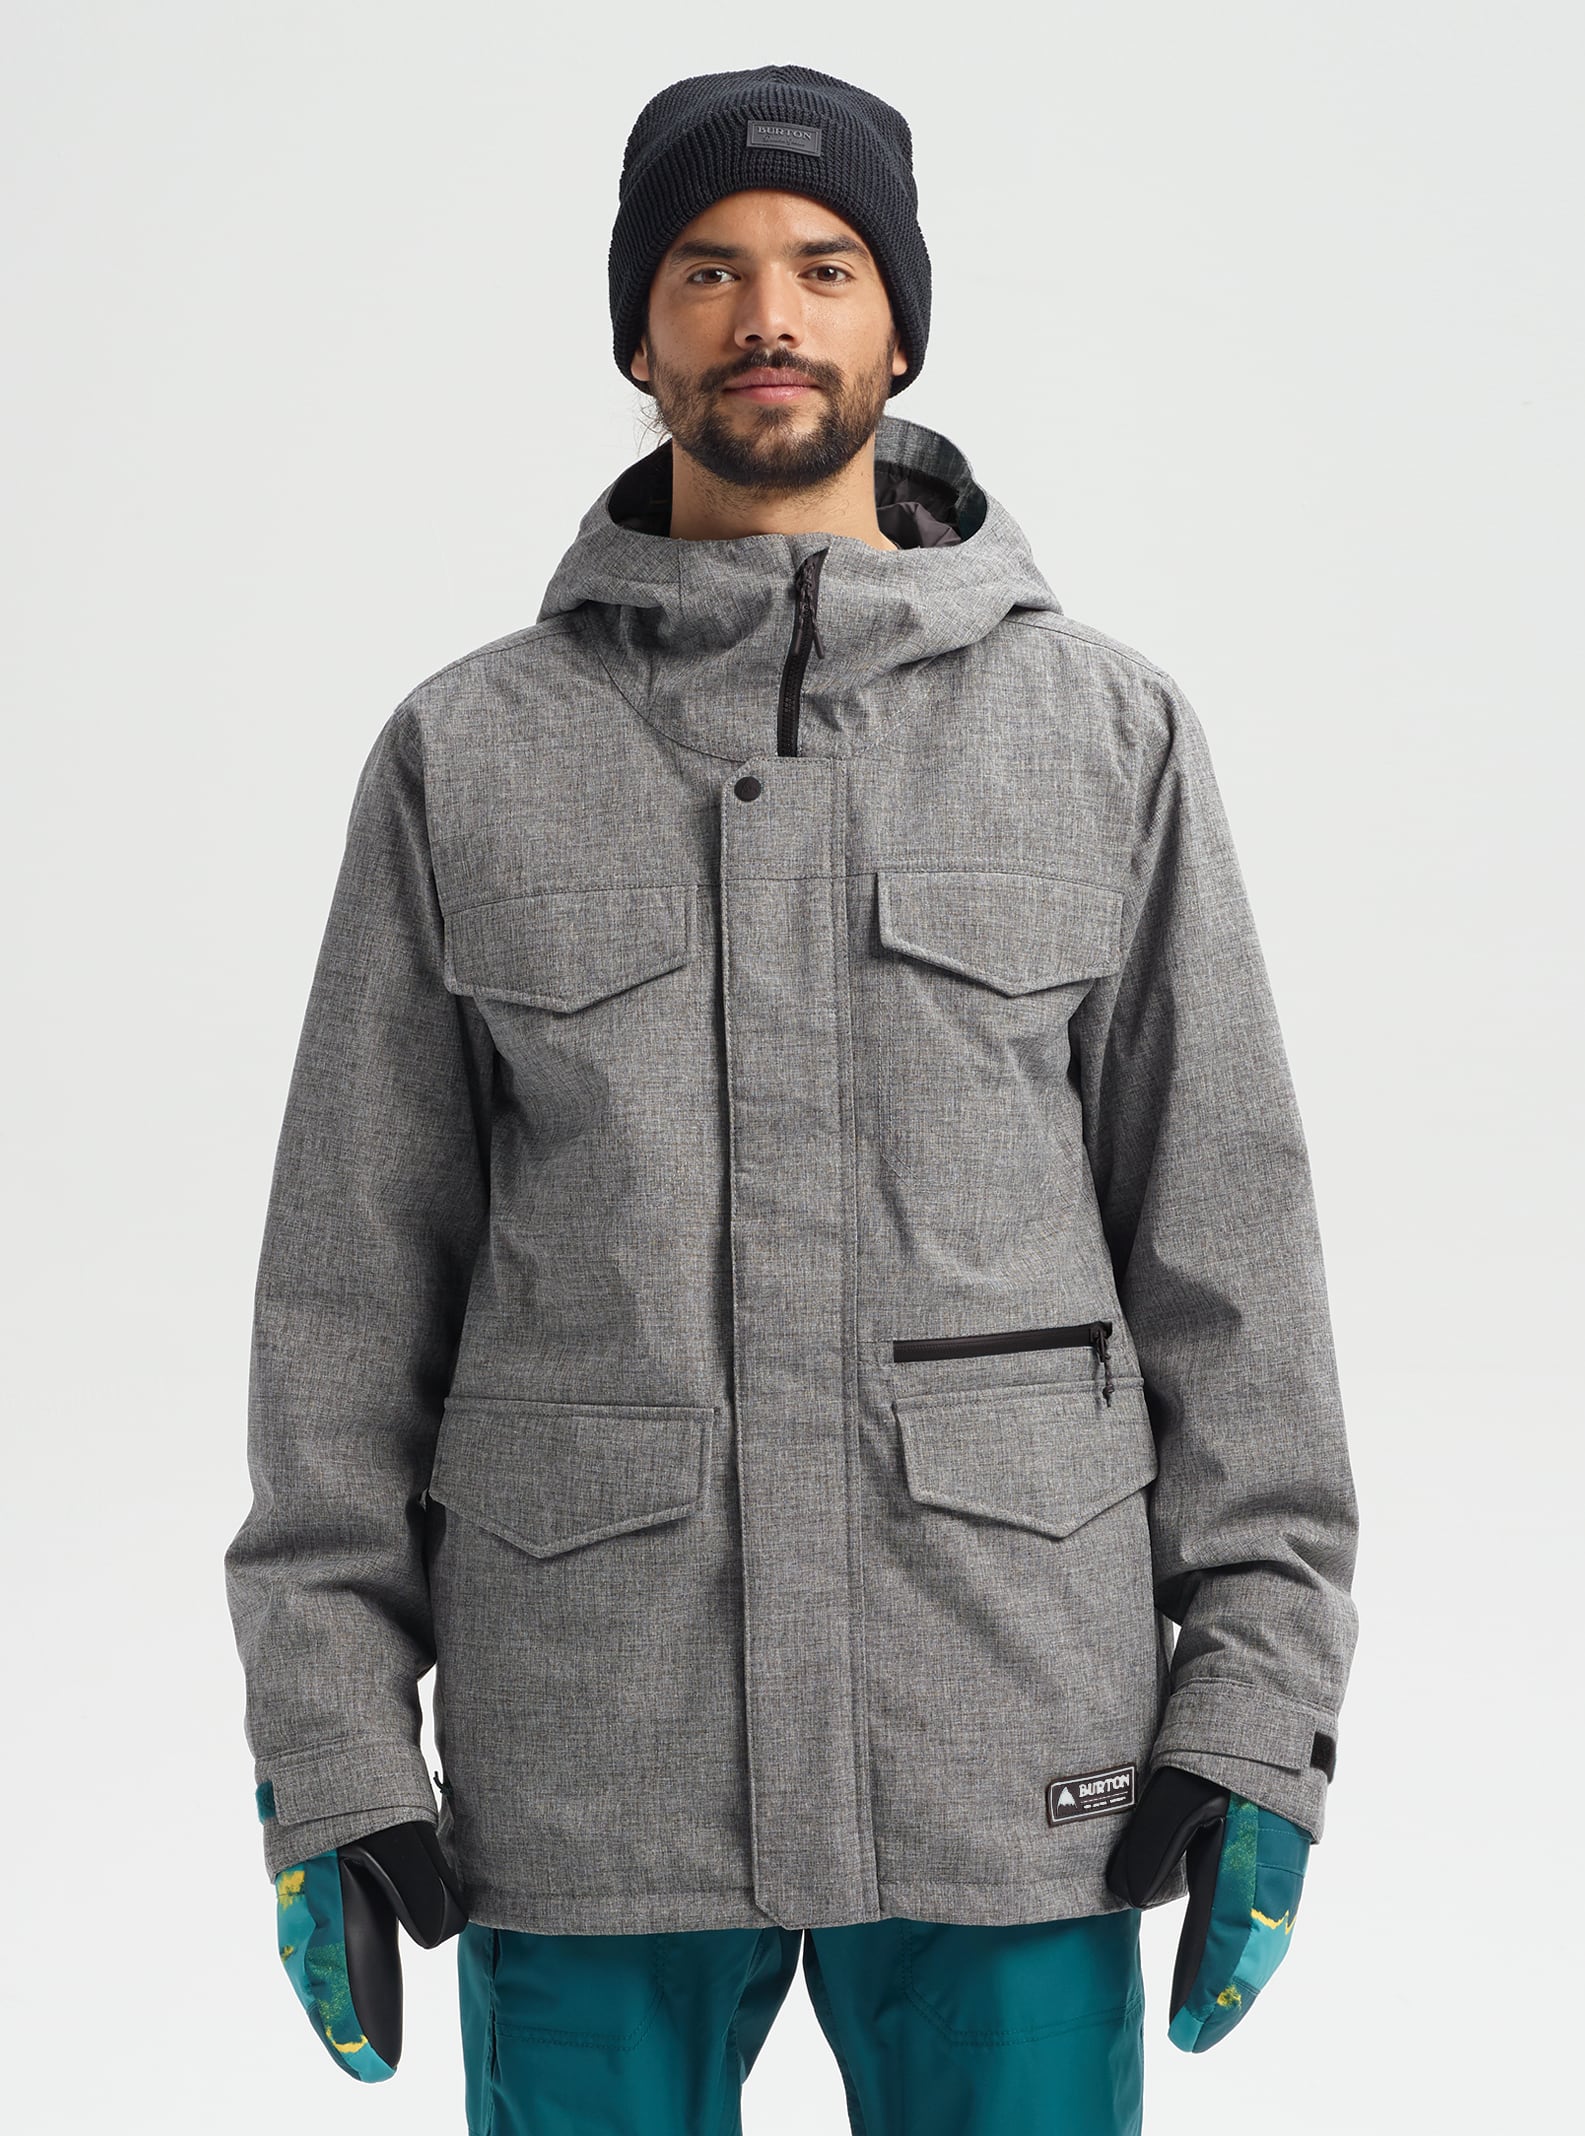 Sale Men's Jackets, Coats, Snow Pants, Bibs Clothing | Snowboards US